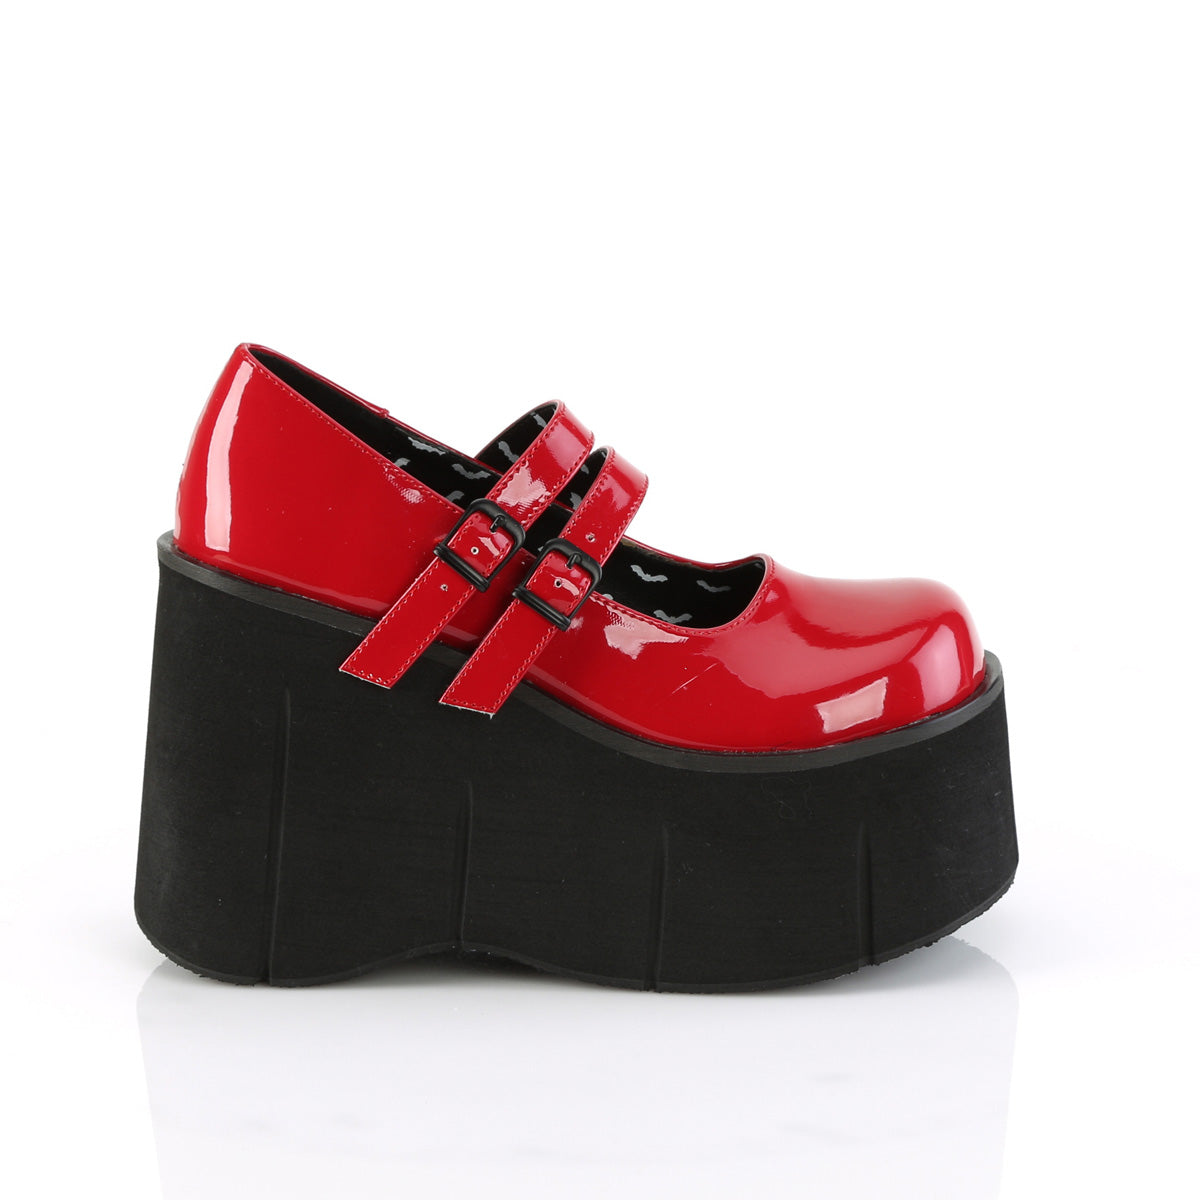 KERA-08 Demonia Red Patent Women's Heels & Platform Shoes [Demonia Cult Alternative Footwear]